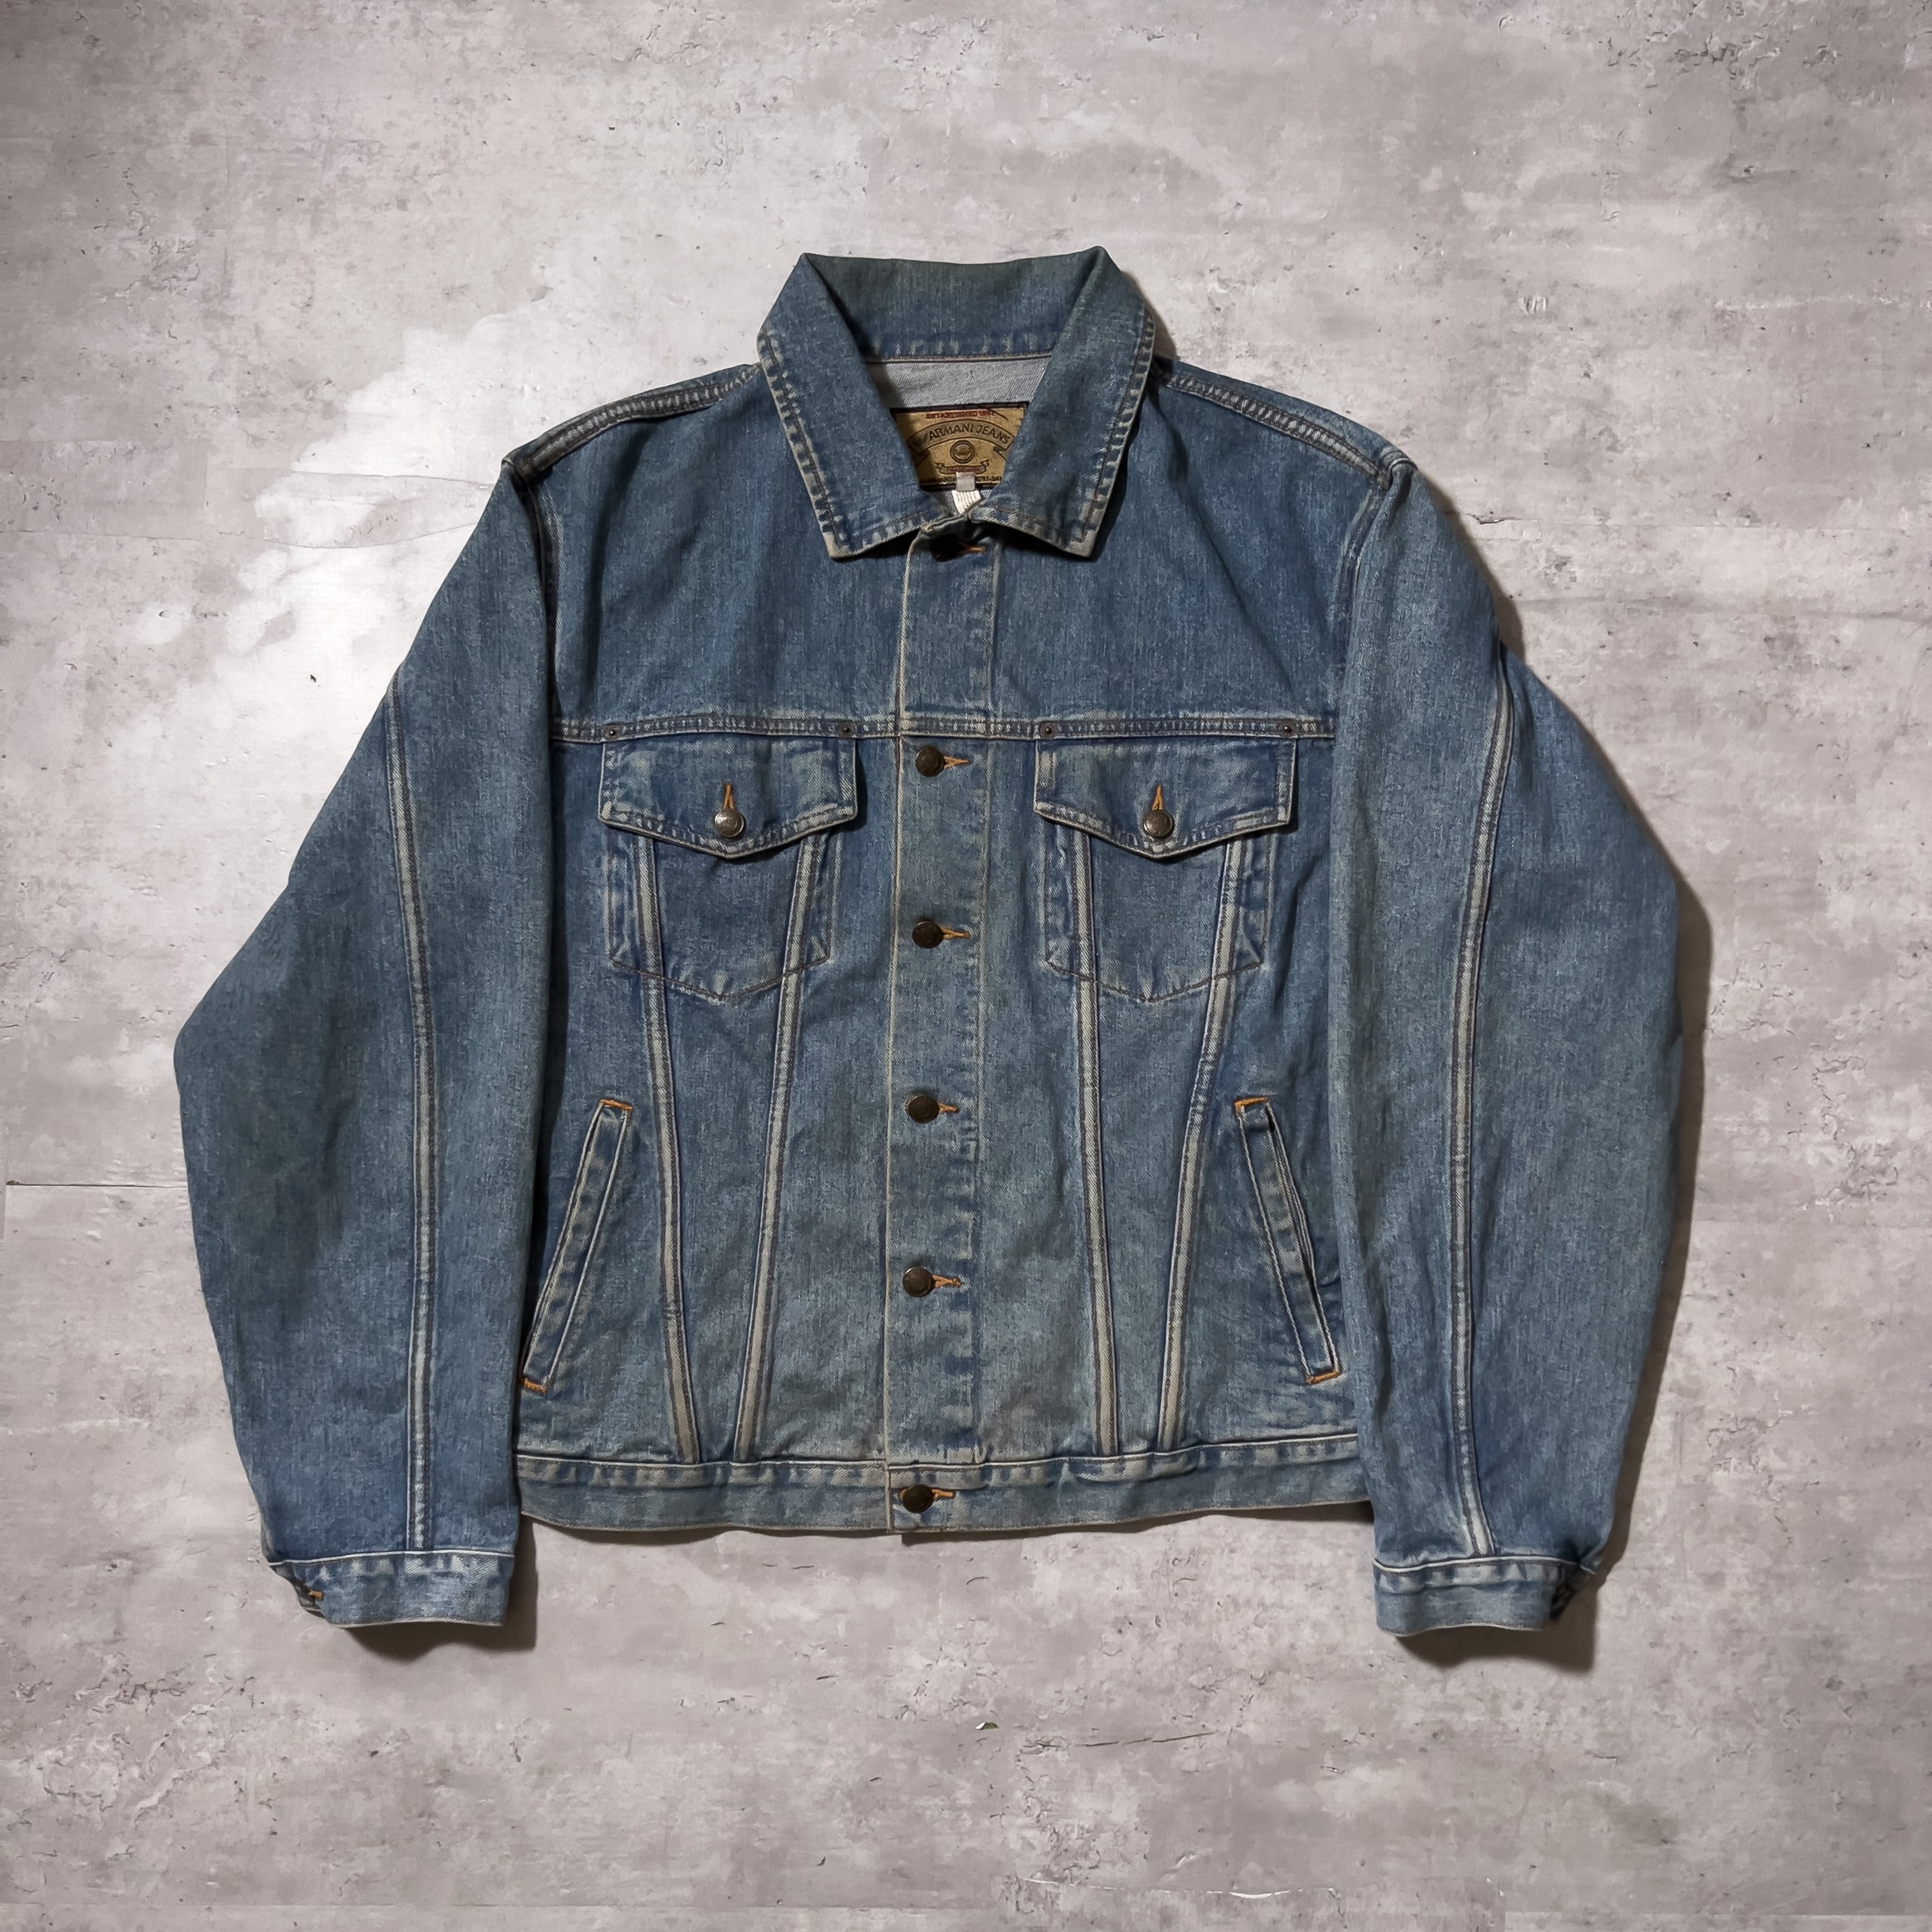 90s “ARMANI jeans” denim jacket made in Hong Kong 90年代 アルマーニジーンズ デニムジャケット  香港製 anti knovum（アンタイノーム）